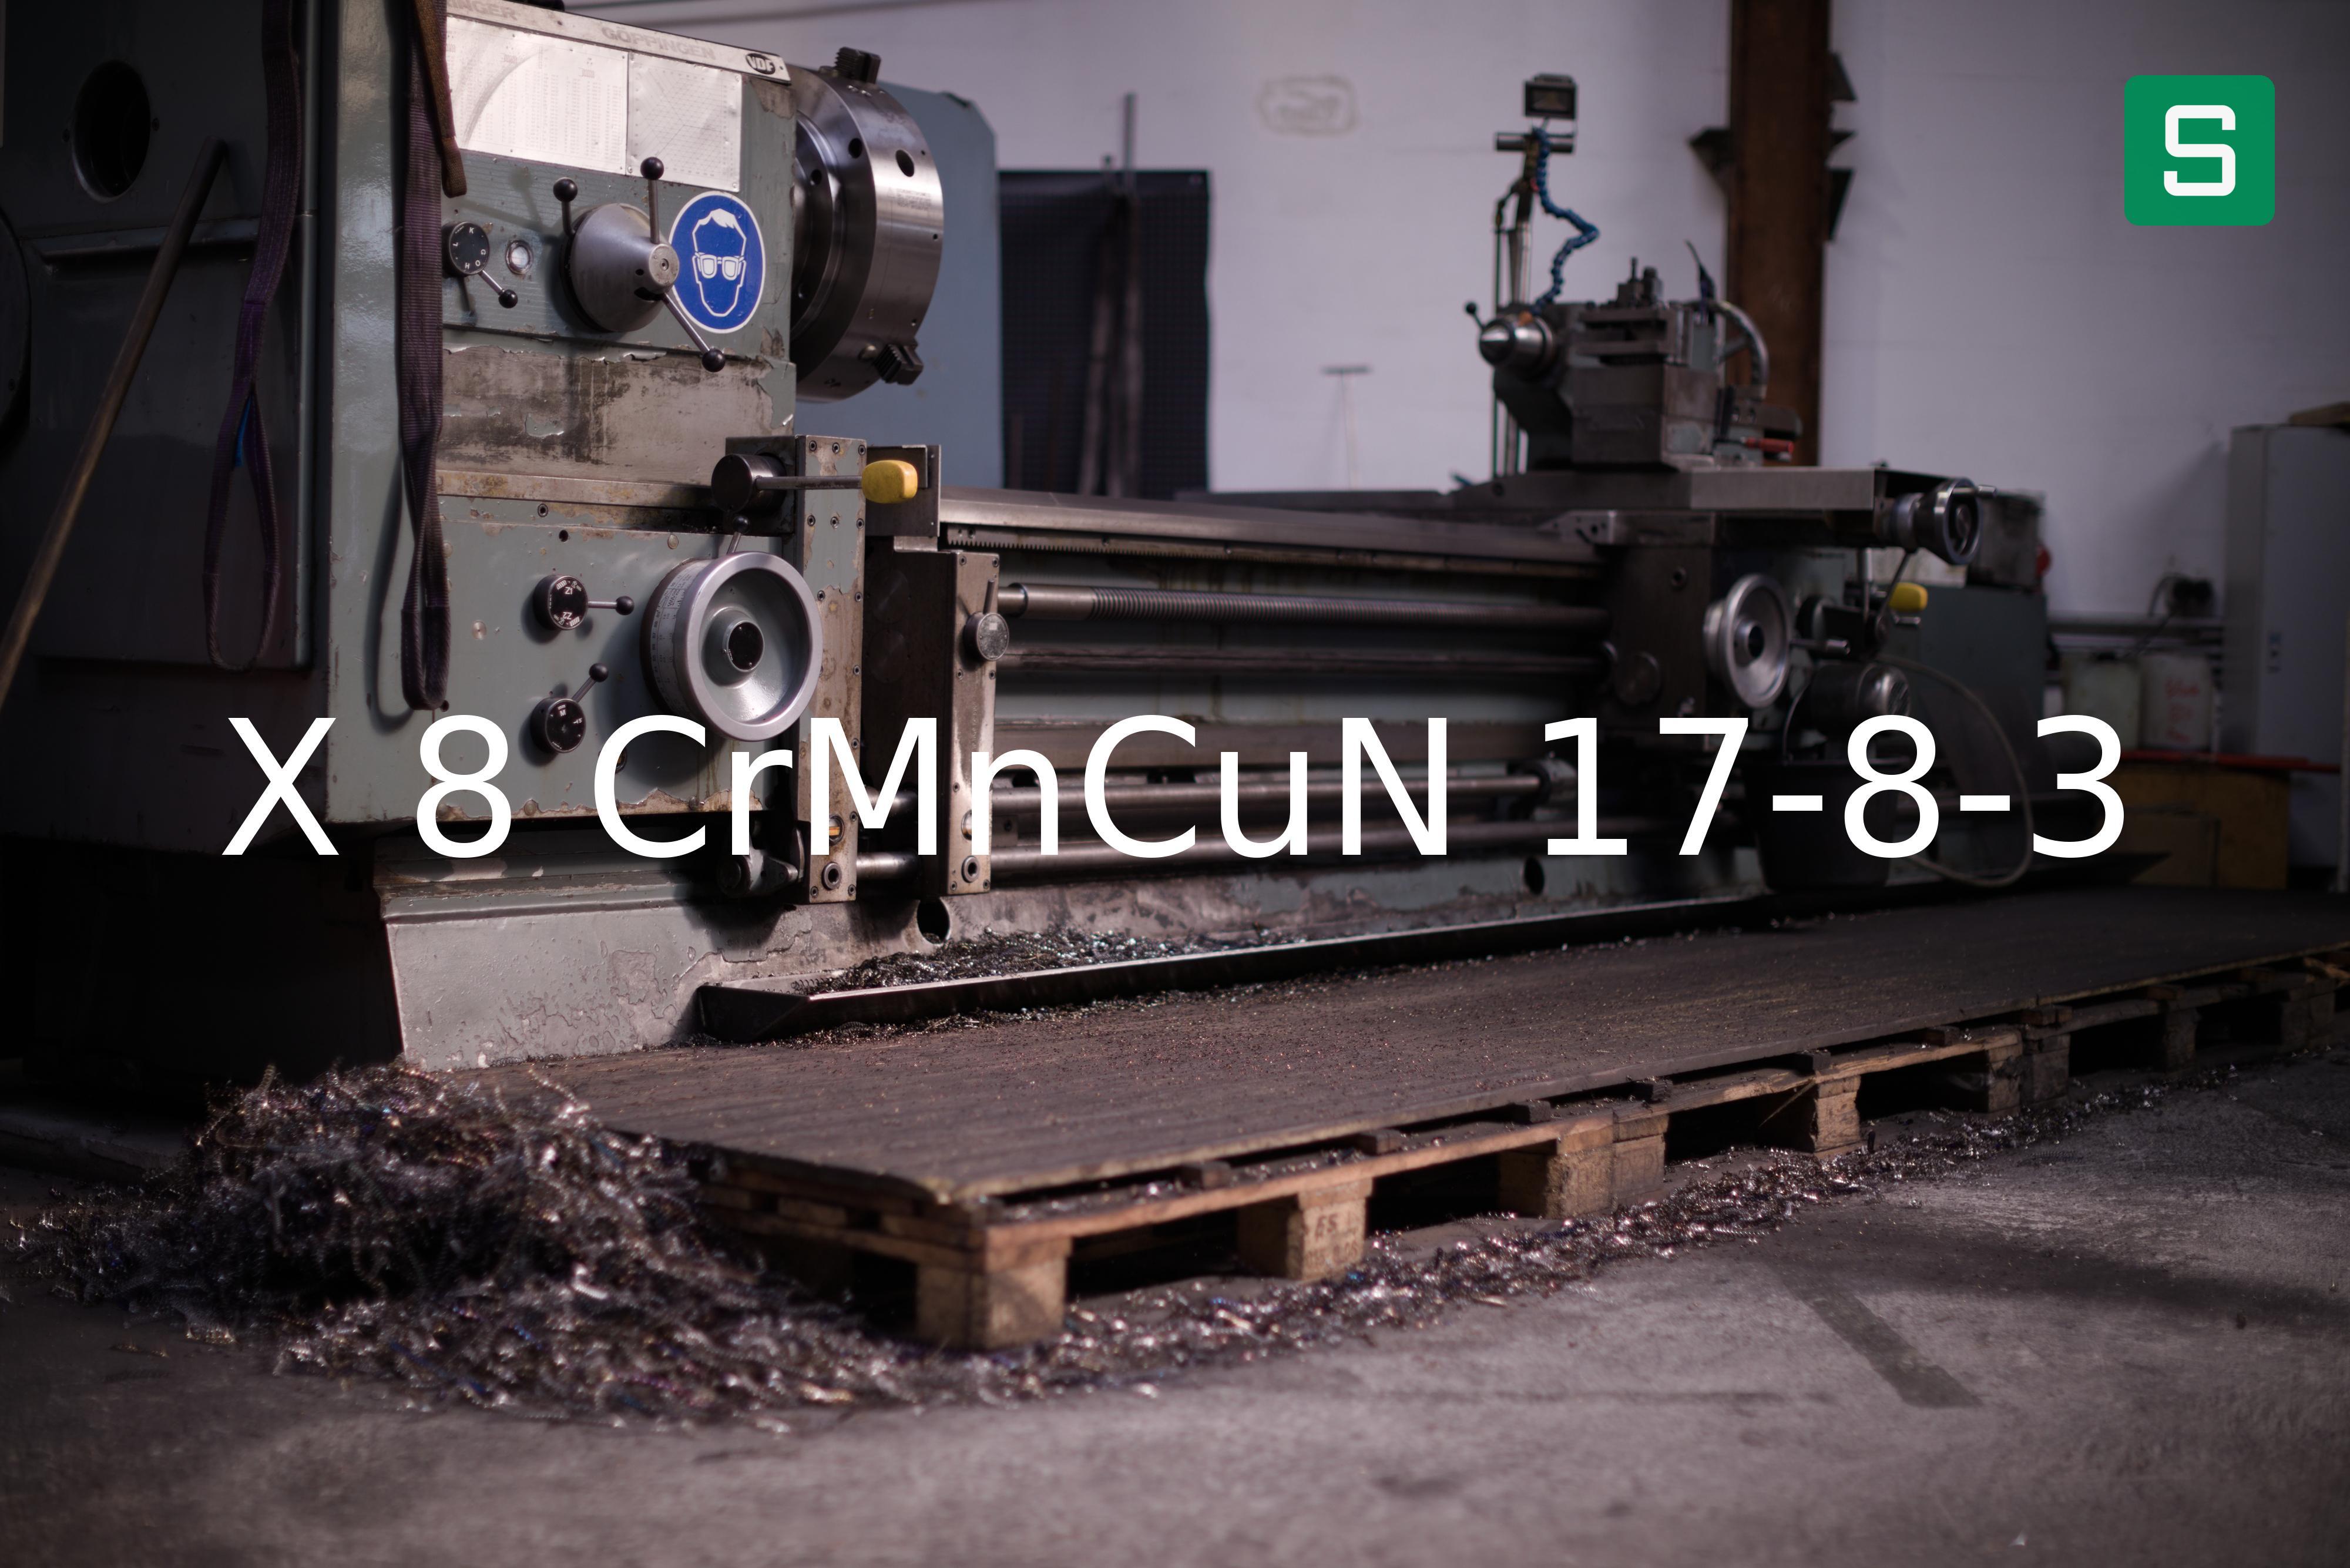 Steel Material: X 8 CrMnCuN 17-8-3